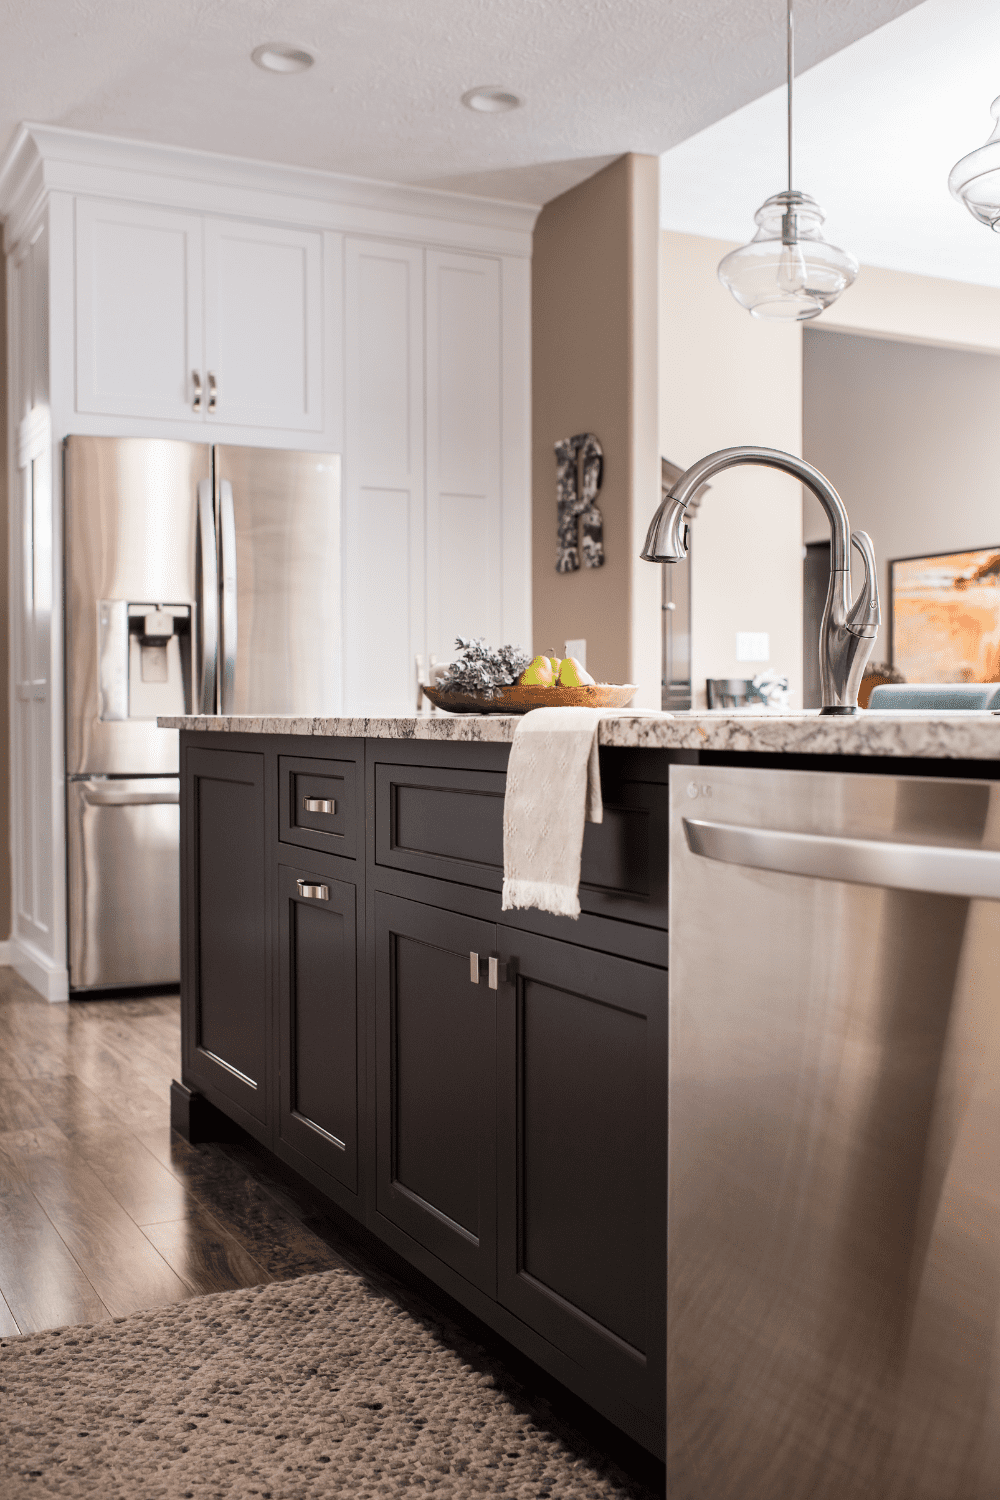 Nicholas Design Build | A versatile kitchen with stainless steel appliances.